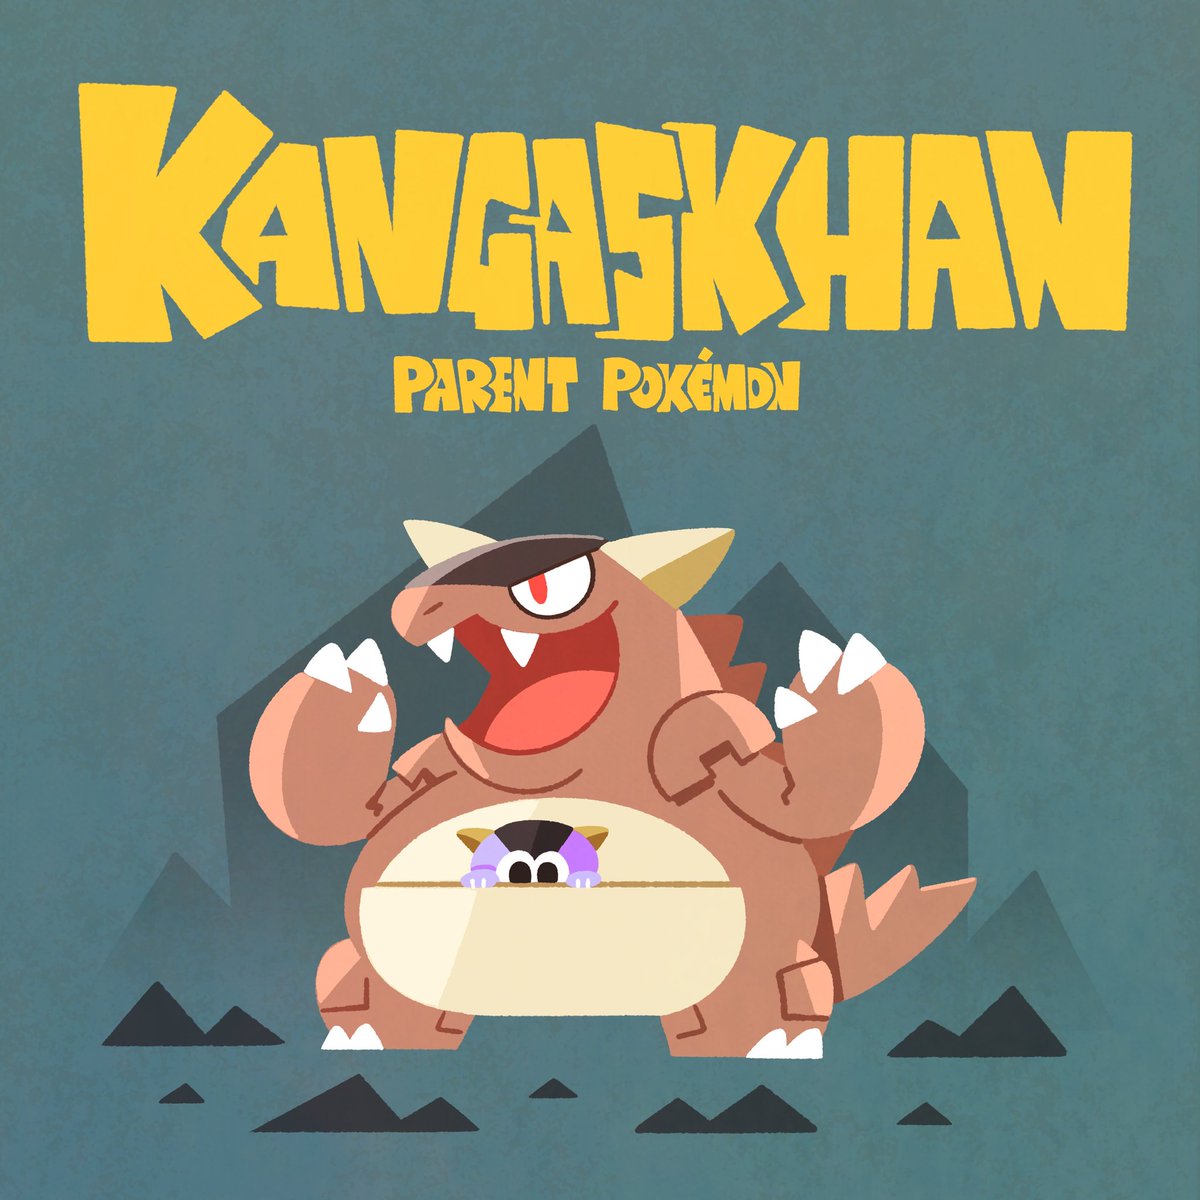 「Kangaskhan」|Julesのイラスト